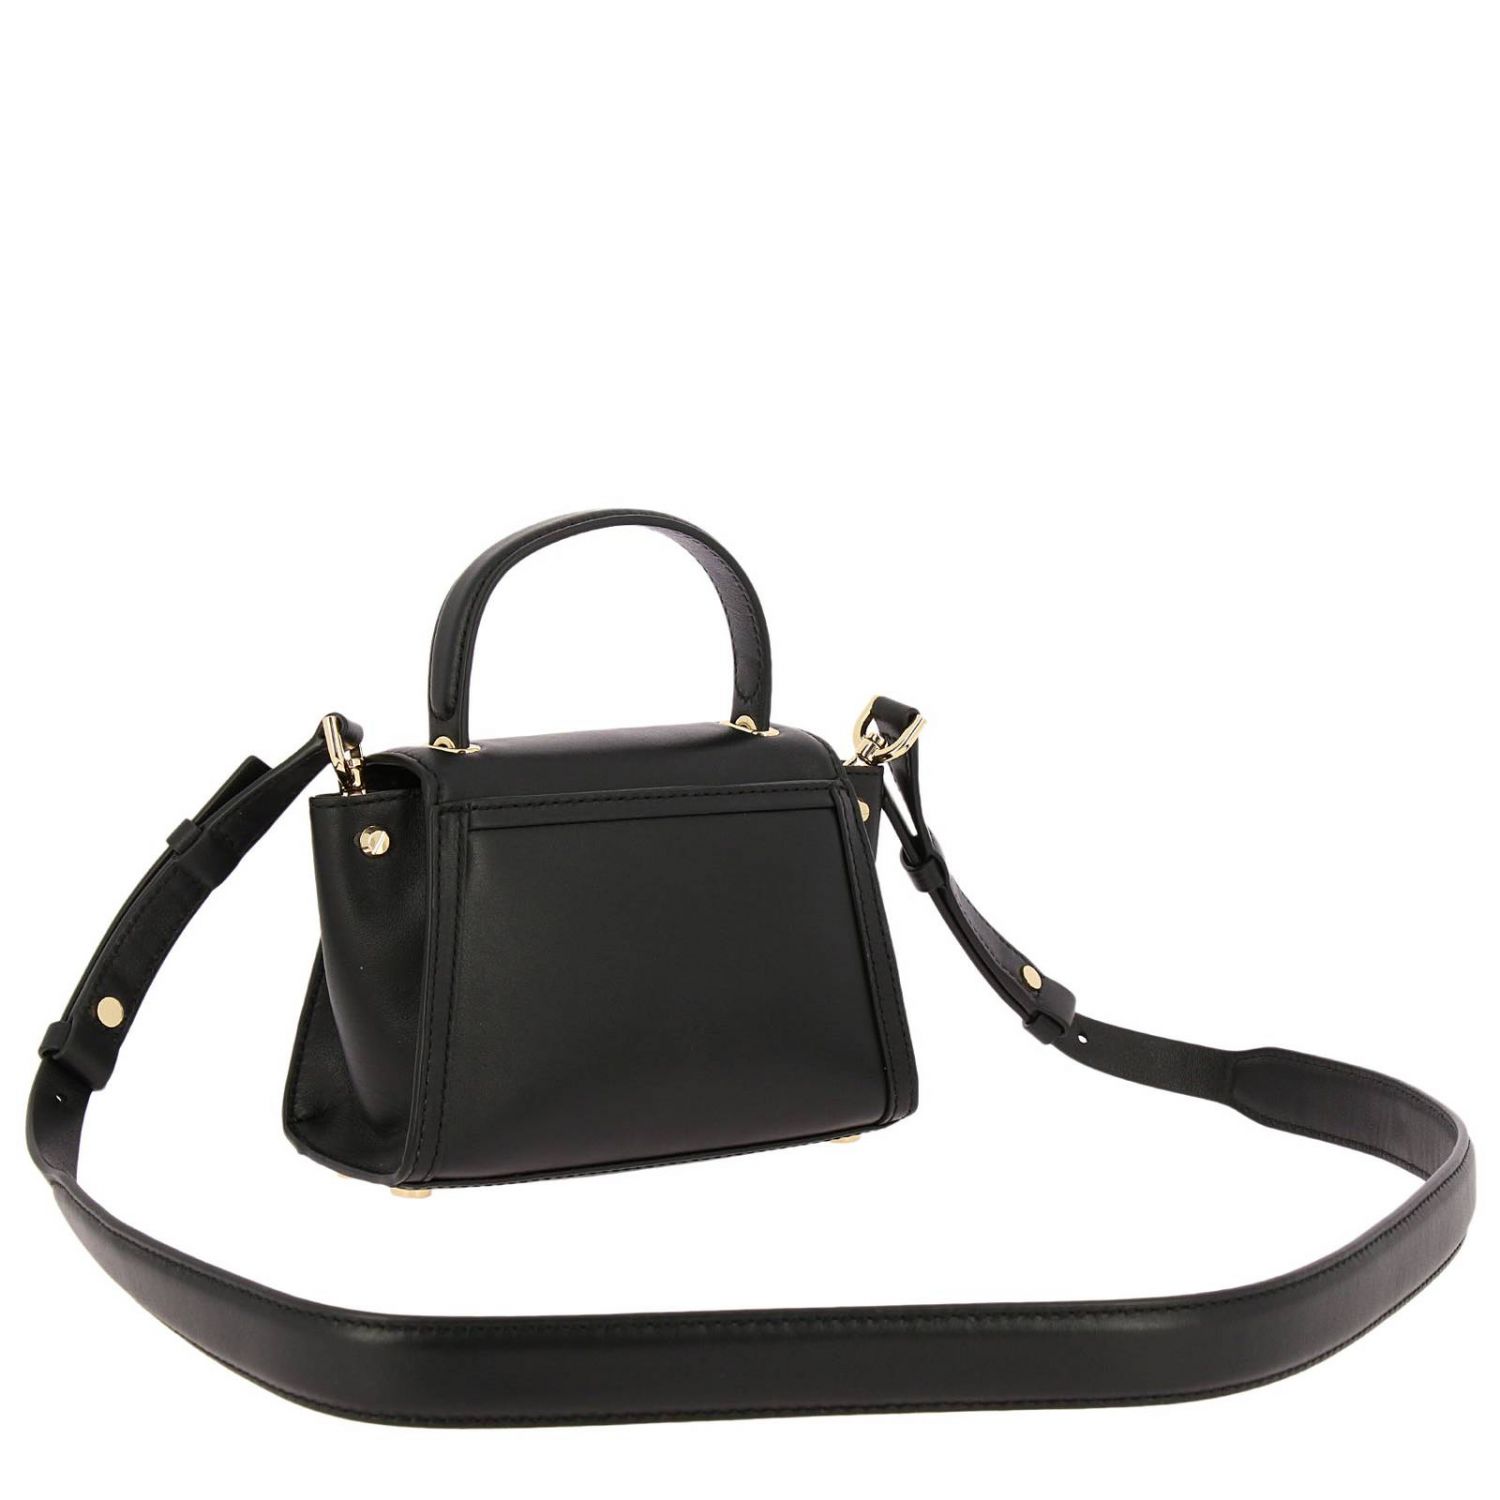 Michael Kors Outlet: Shoulder bag women Michael - Black | Mini Bag ...